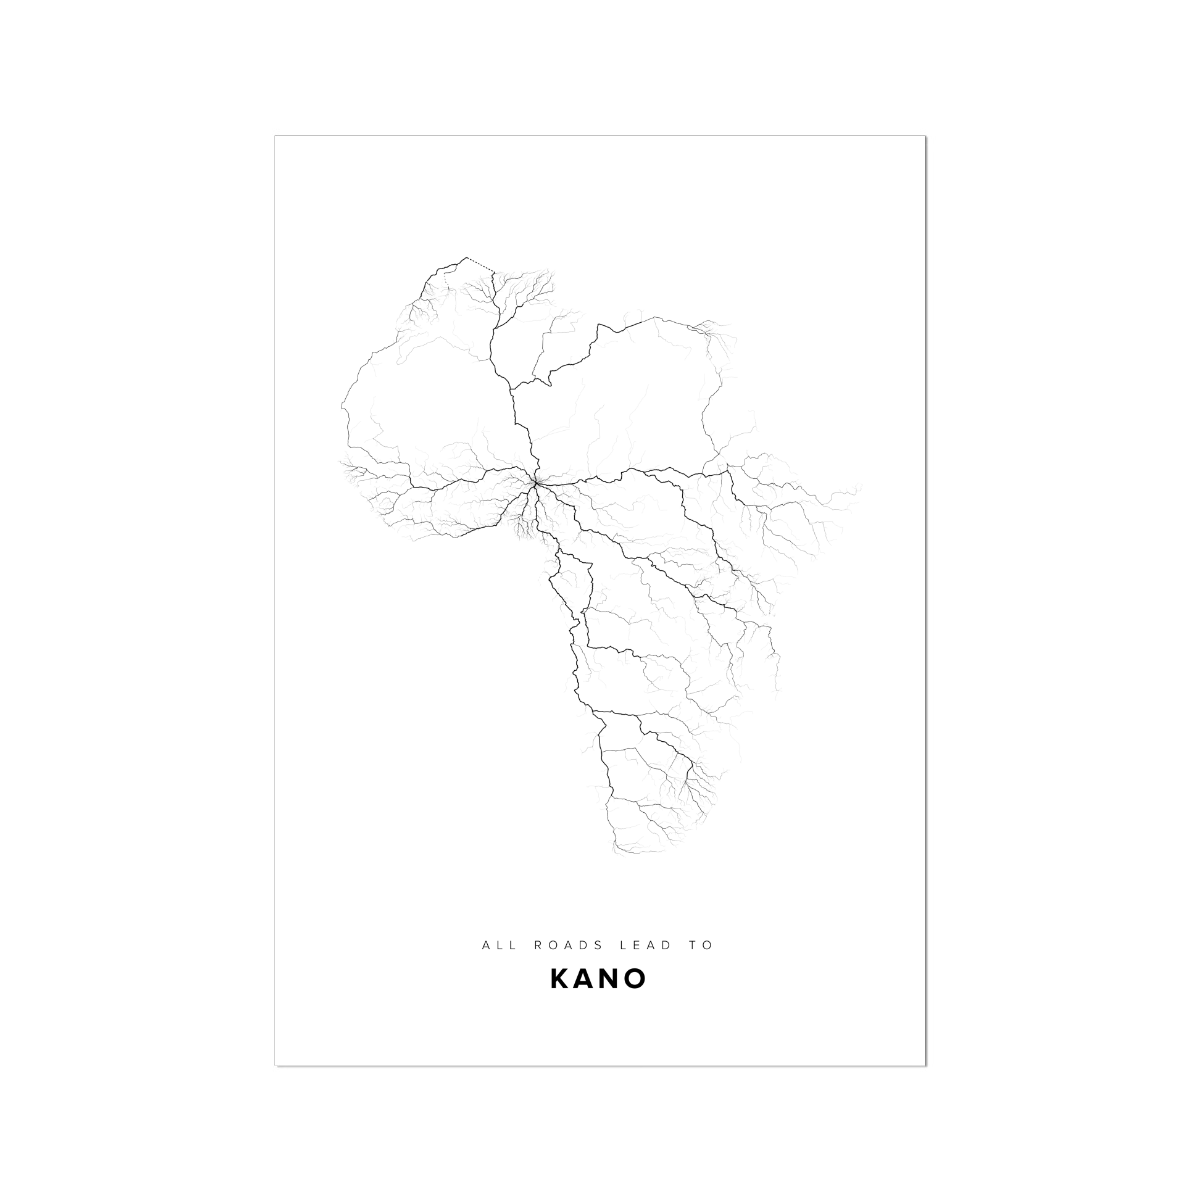 All roads lead to Kano (Nigeria) Fine Art Map Print